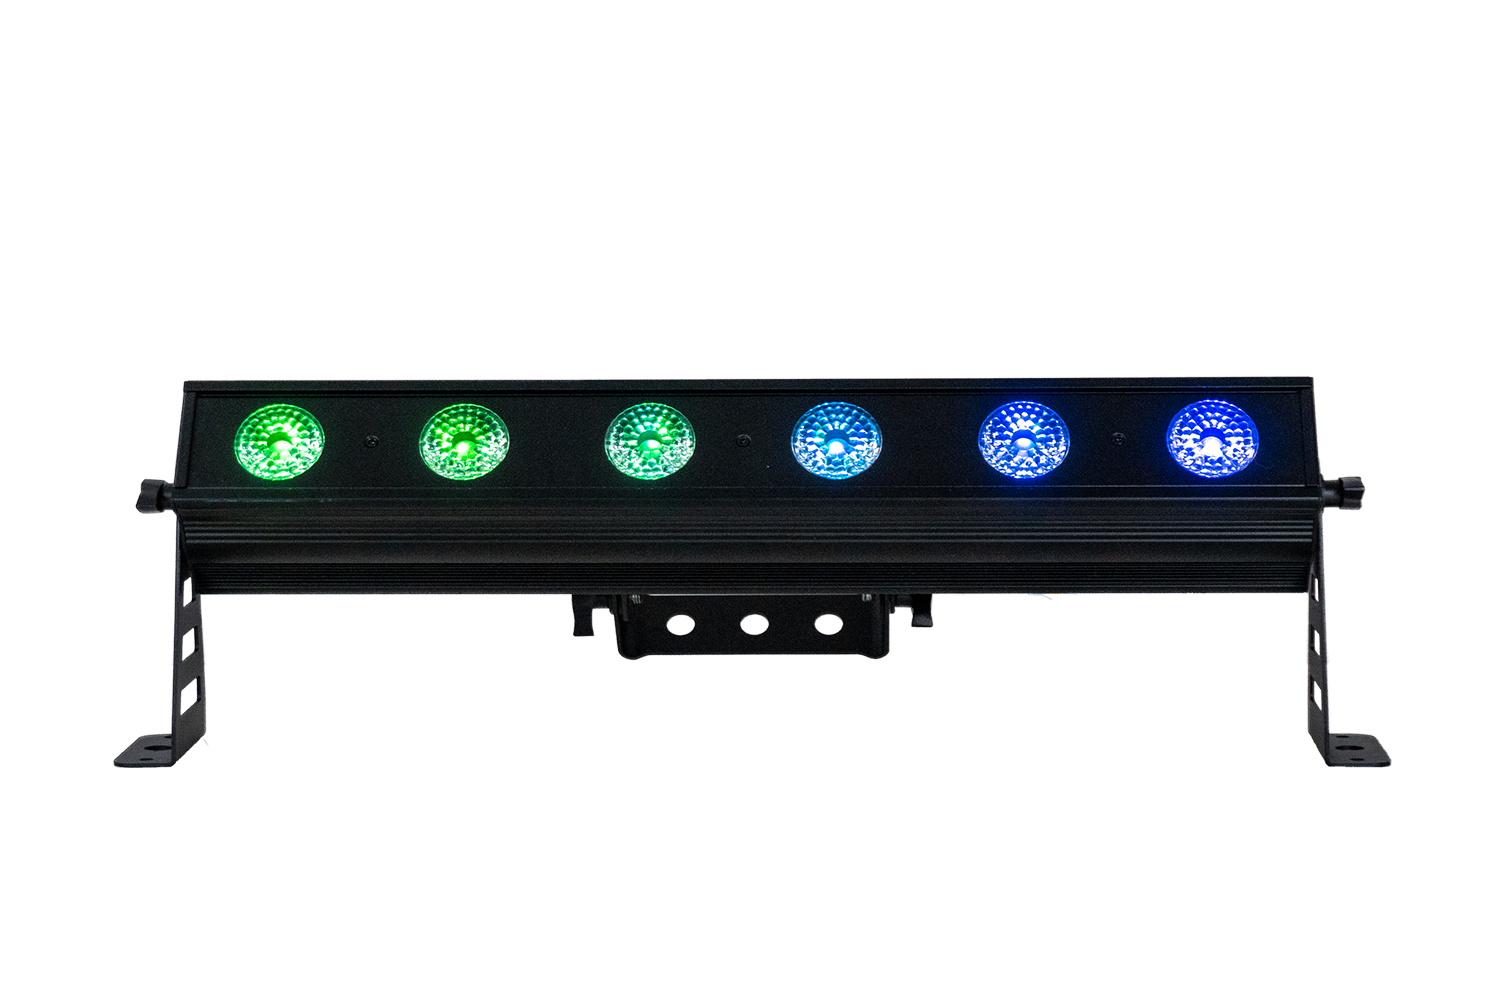 Event Lighting PIXBAR6X12 - 6x12W RGBWAU Pixel Control Bar